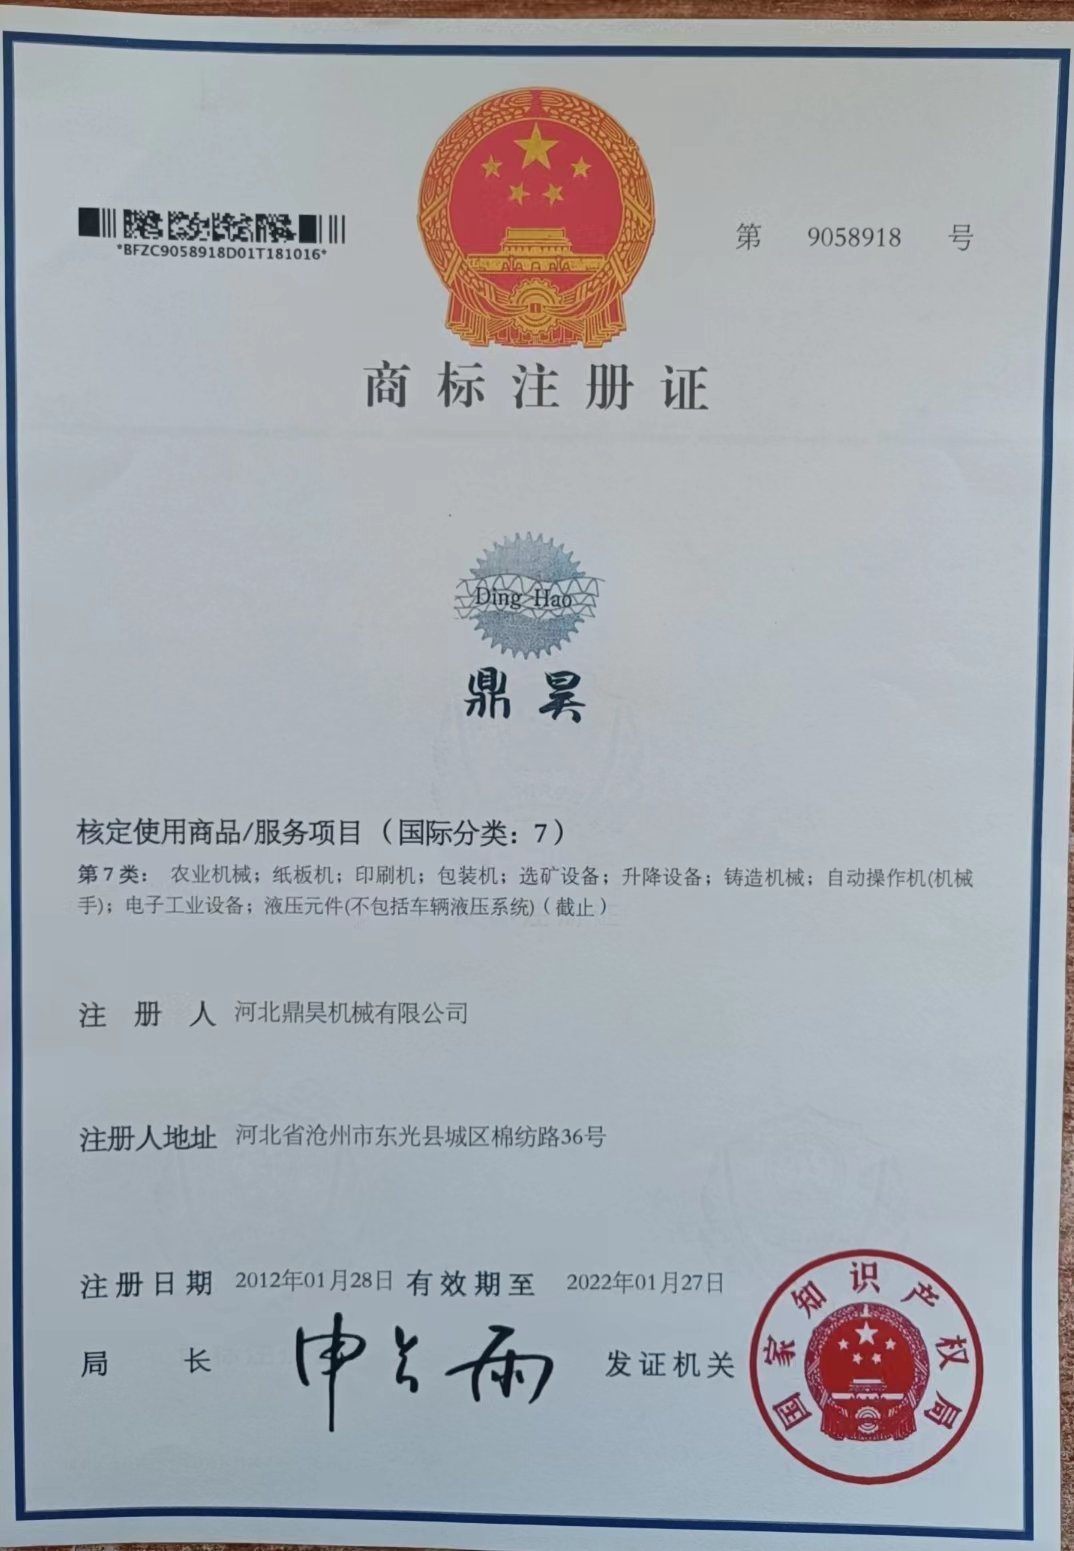 Certificate of Dinghao Trademark